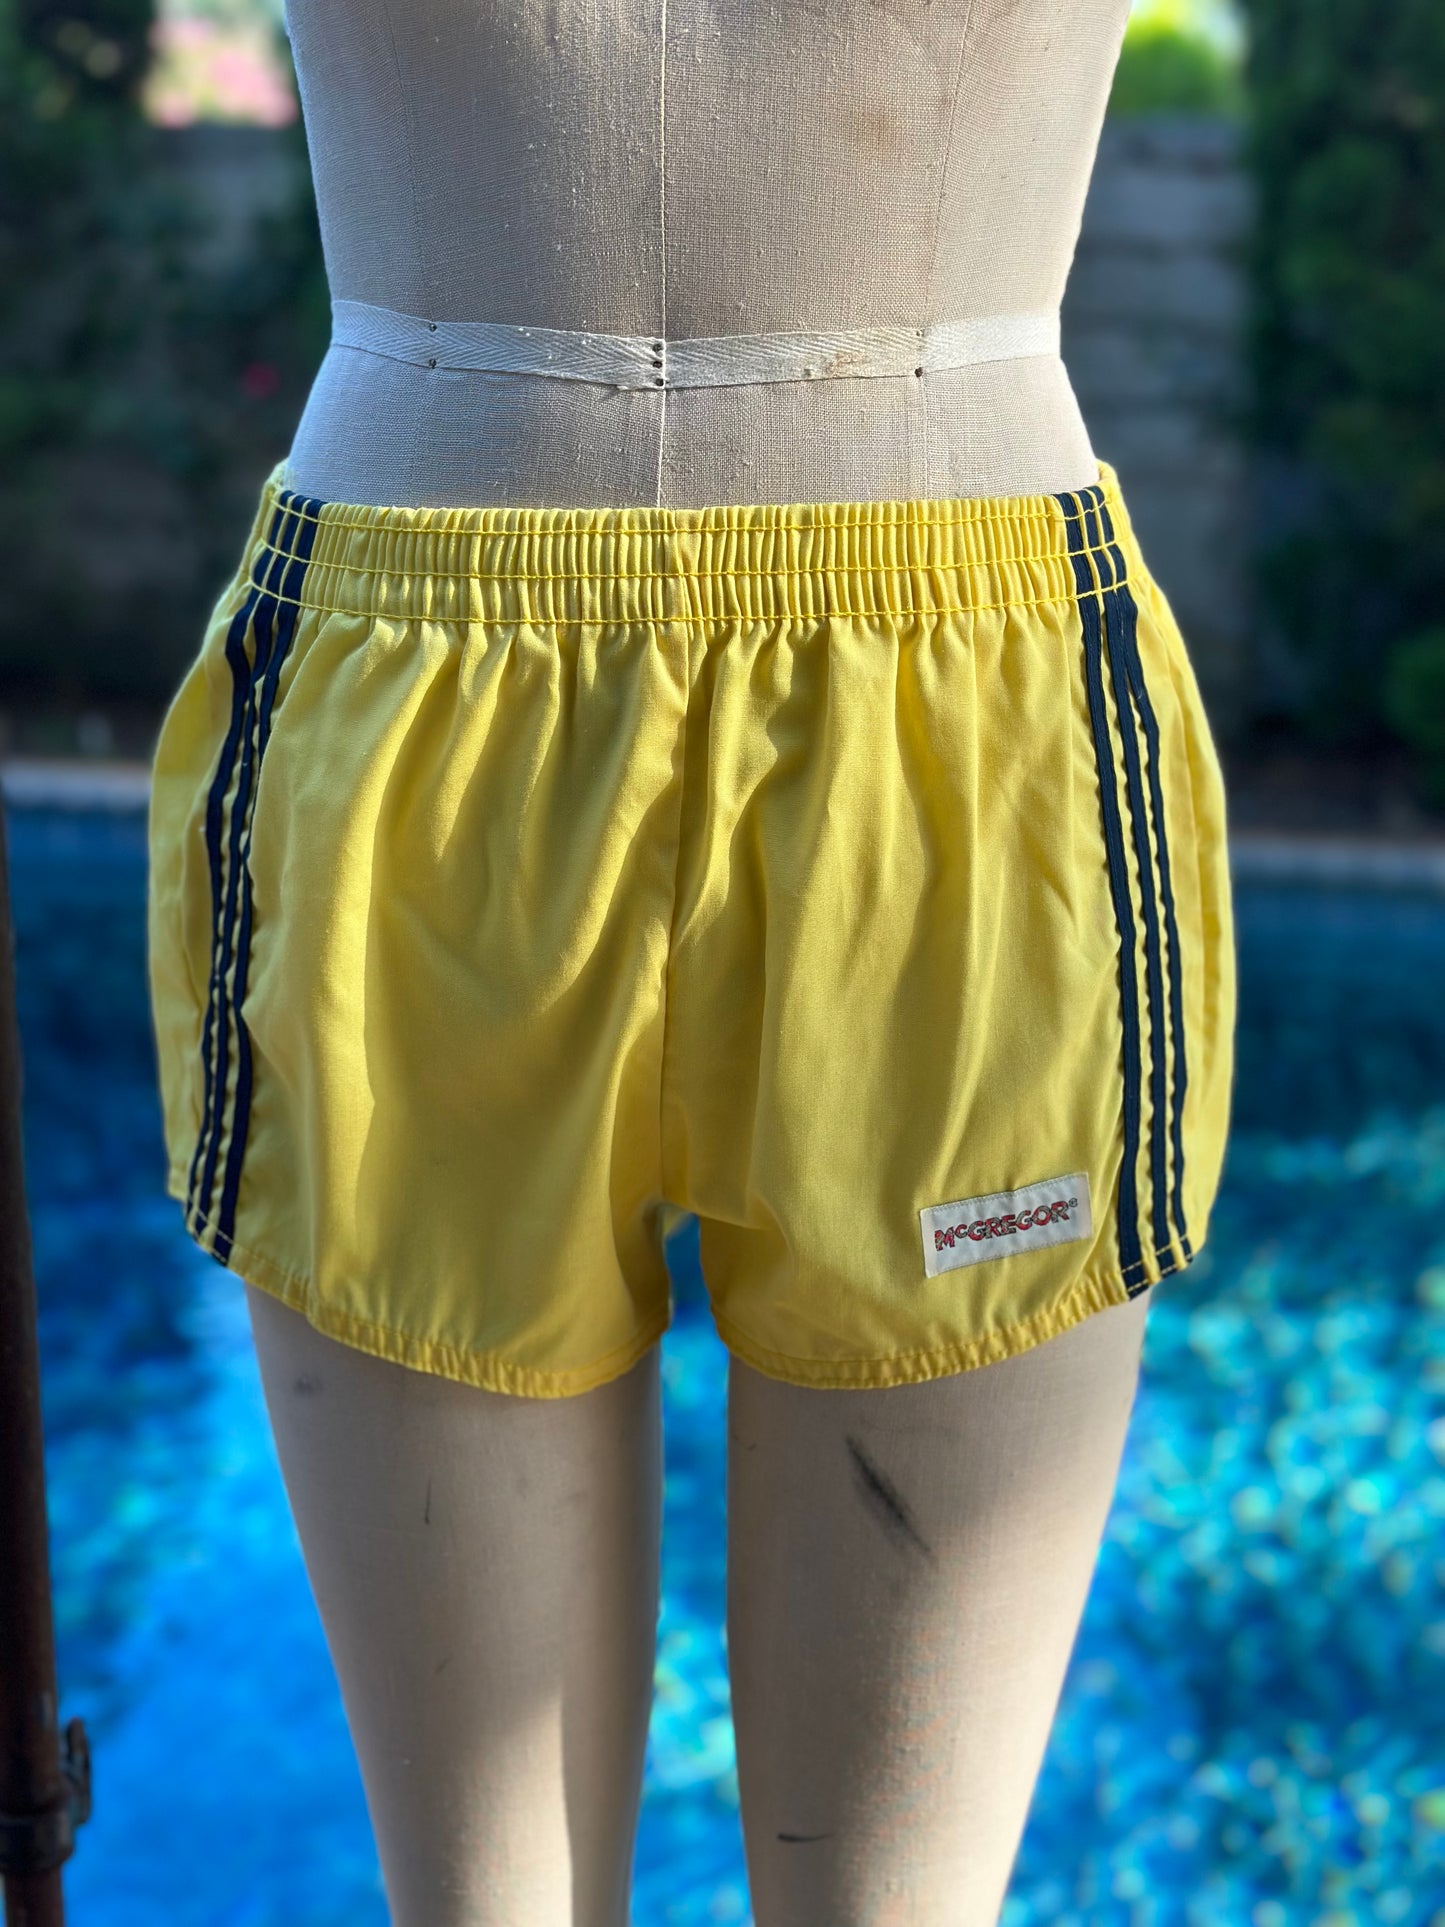 1980s Men’s McGregor Swimsuit, 27-36" Waist, Yellow with Stripes